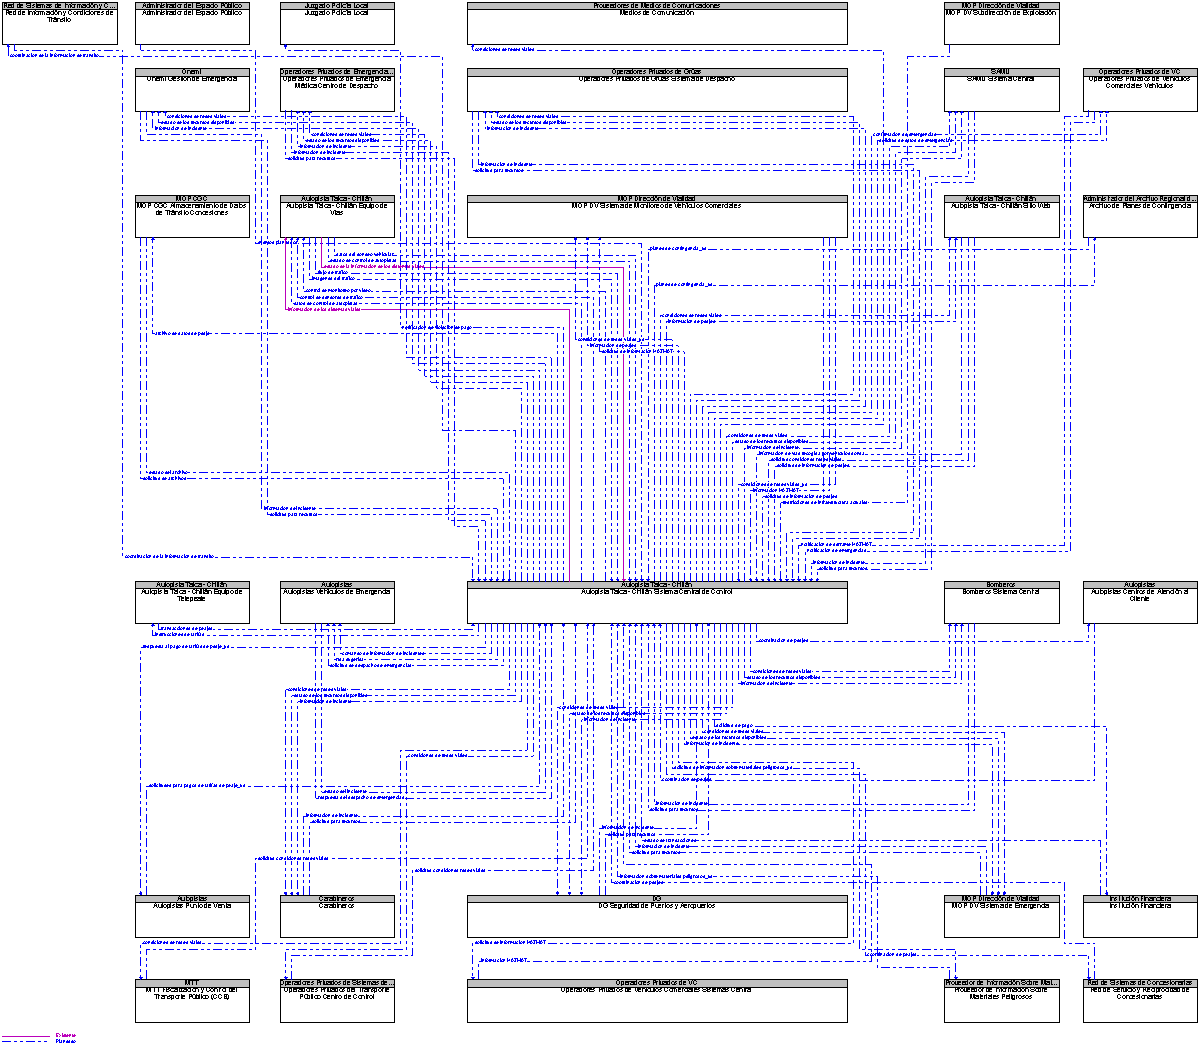 Diagrama Del Contexto por Autopista Talca - Chilln Sistema Central de Control